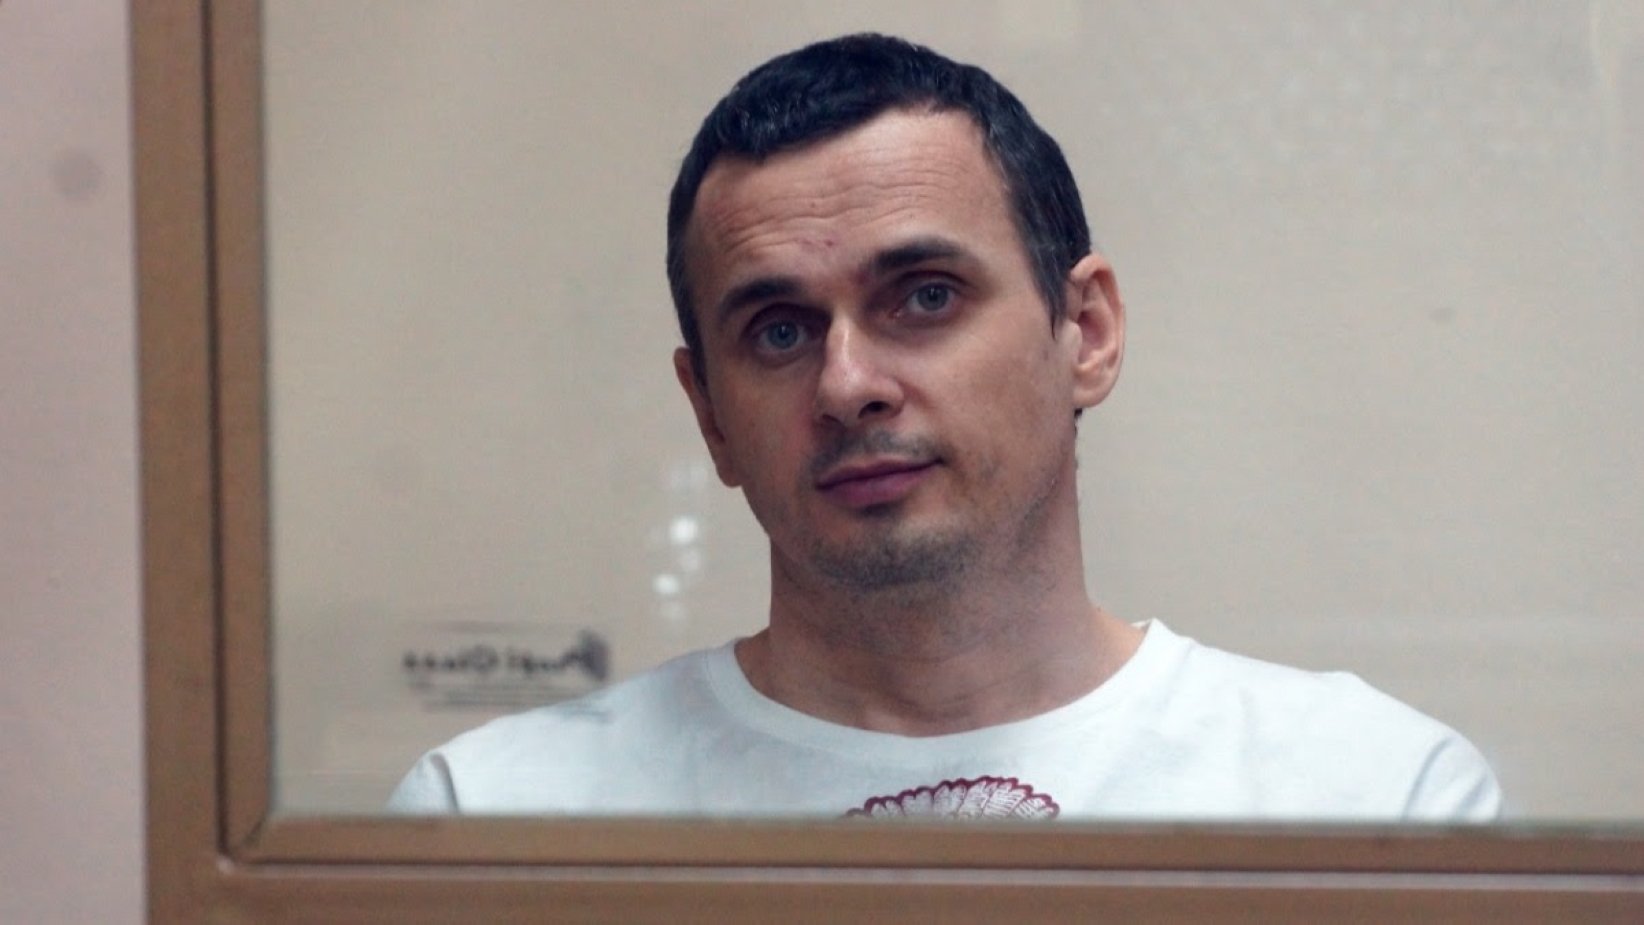 Oleg Sentsov: "Vaig ser víctima d'una acusació fabricada de terrorisme"